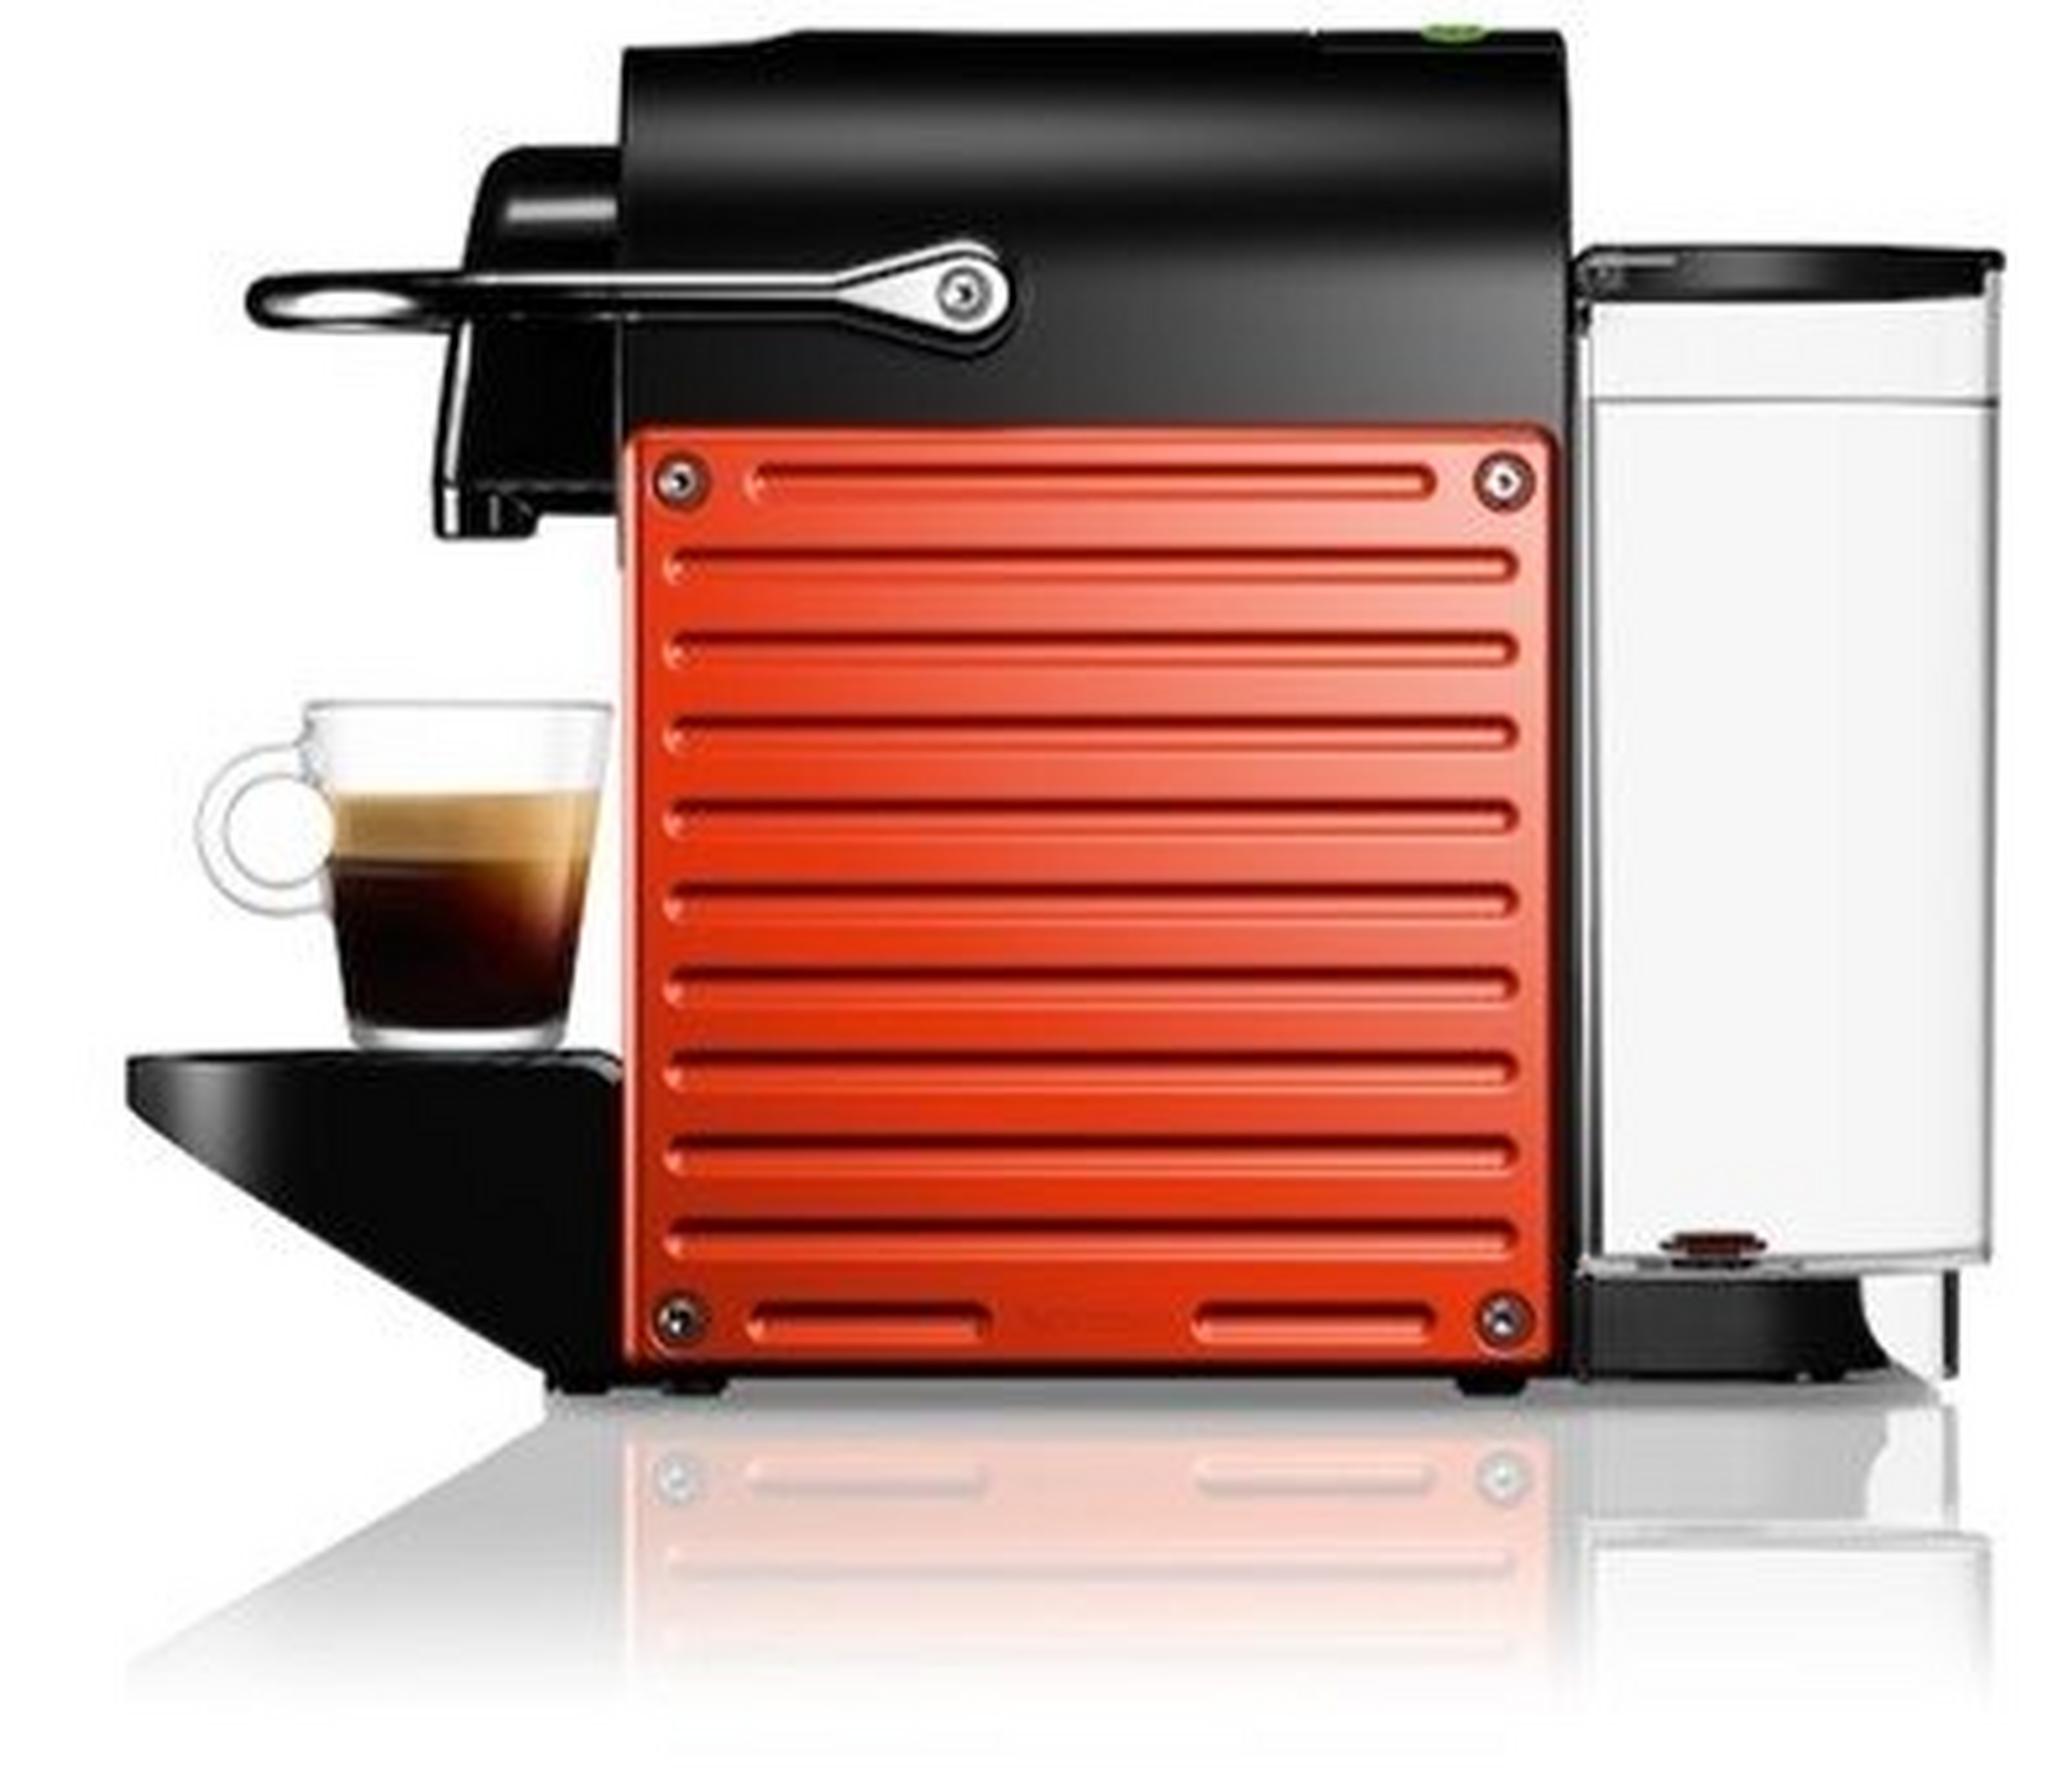 Nespresso Pixie Coffee Machine (C61-ME-RE-NE) - Red